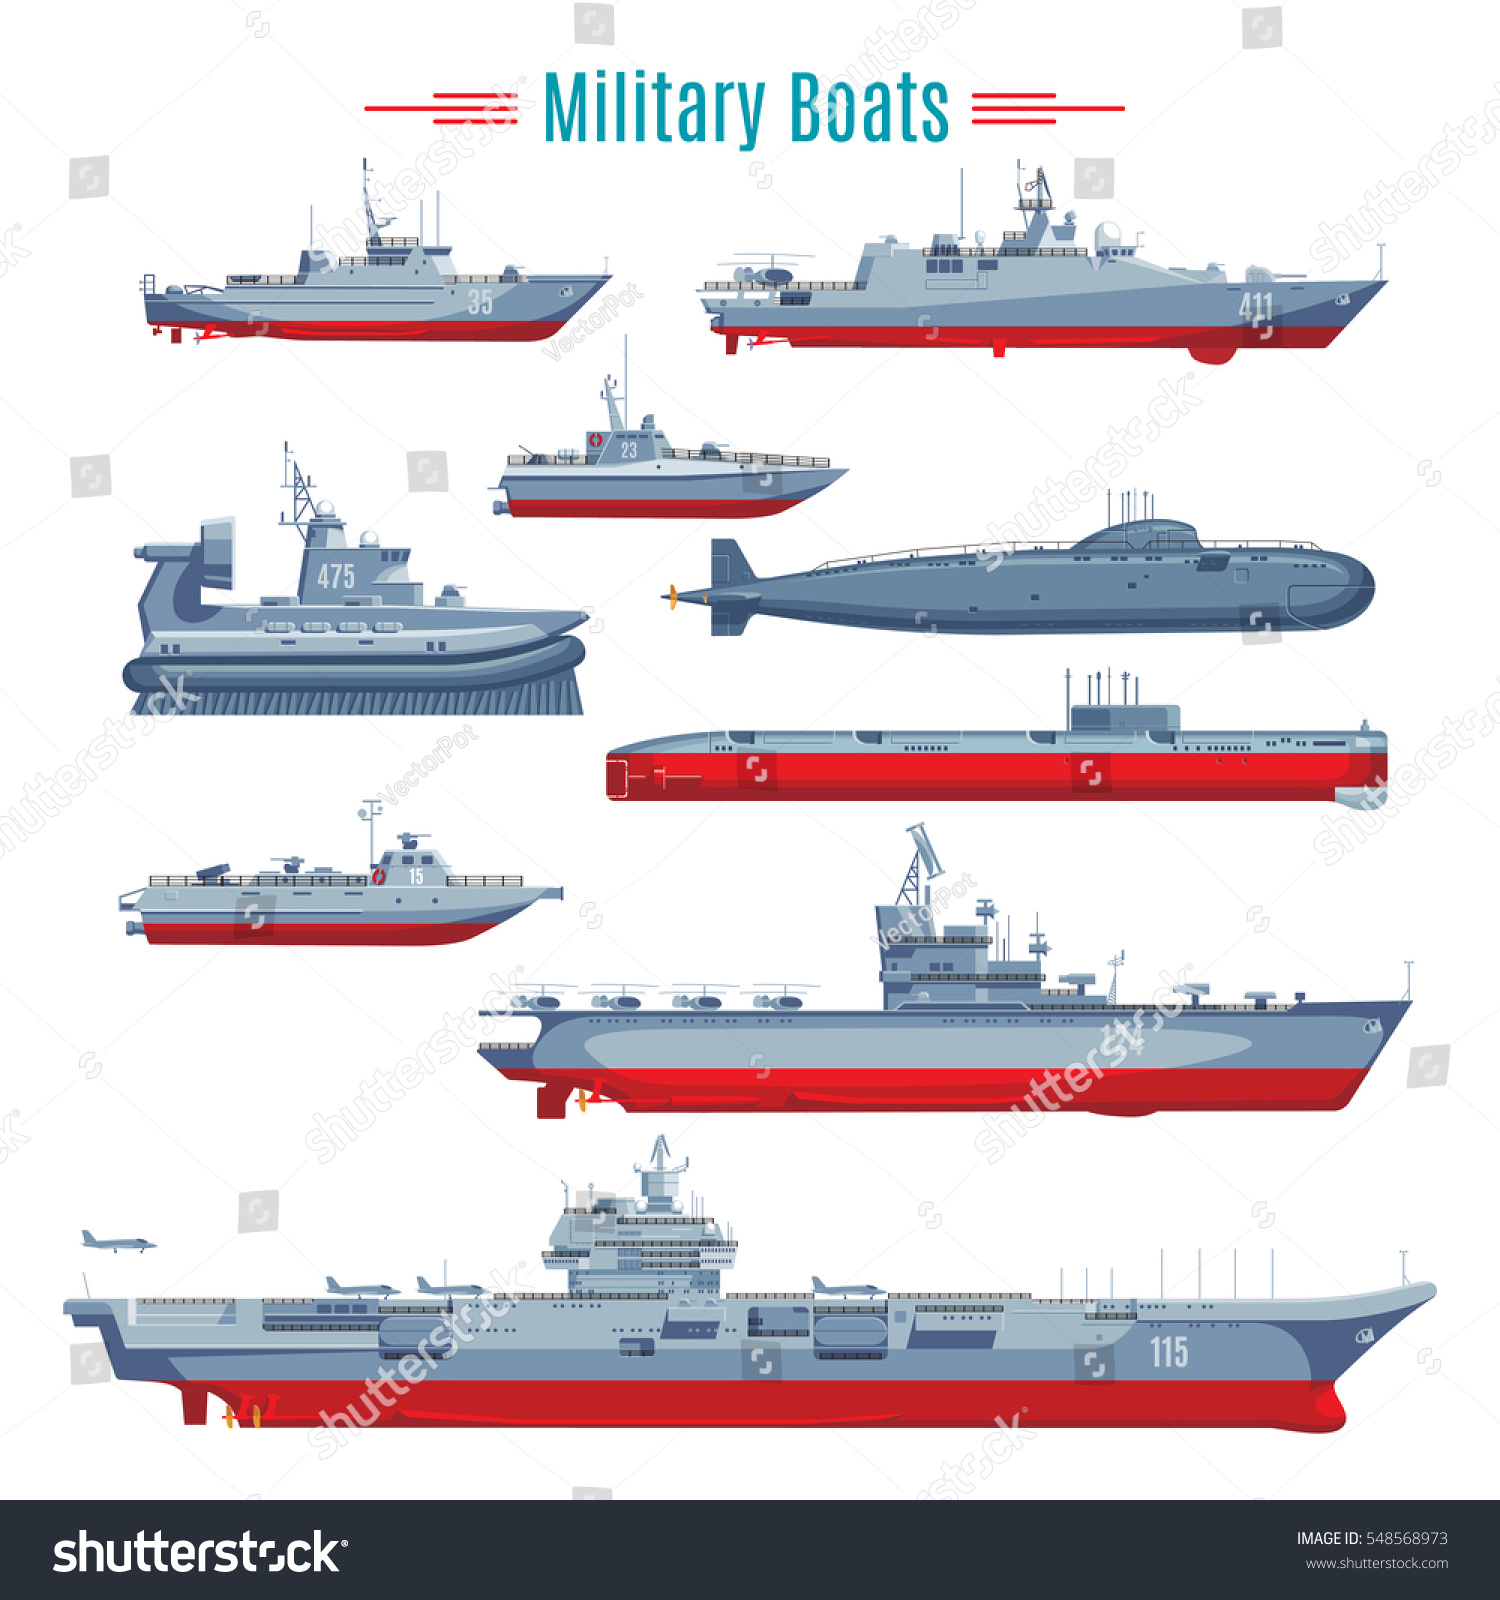 Boats: Types Of Boats